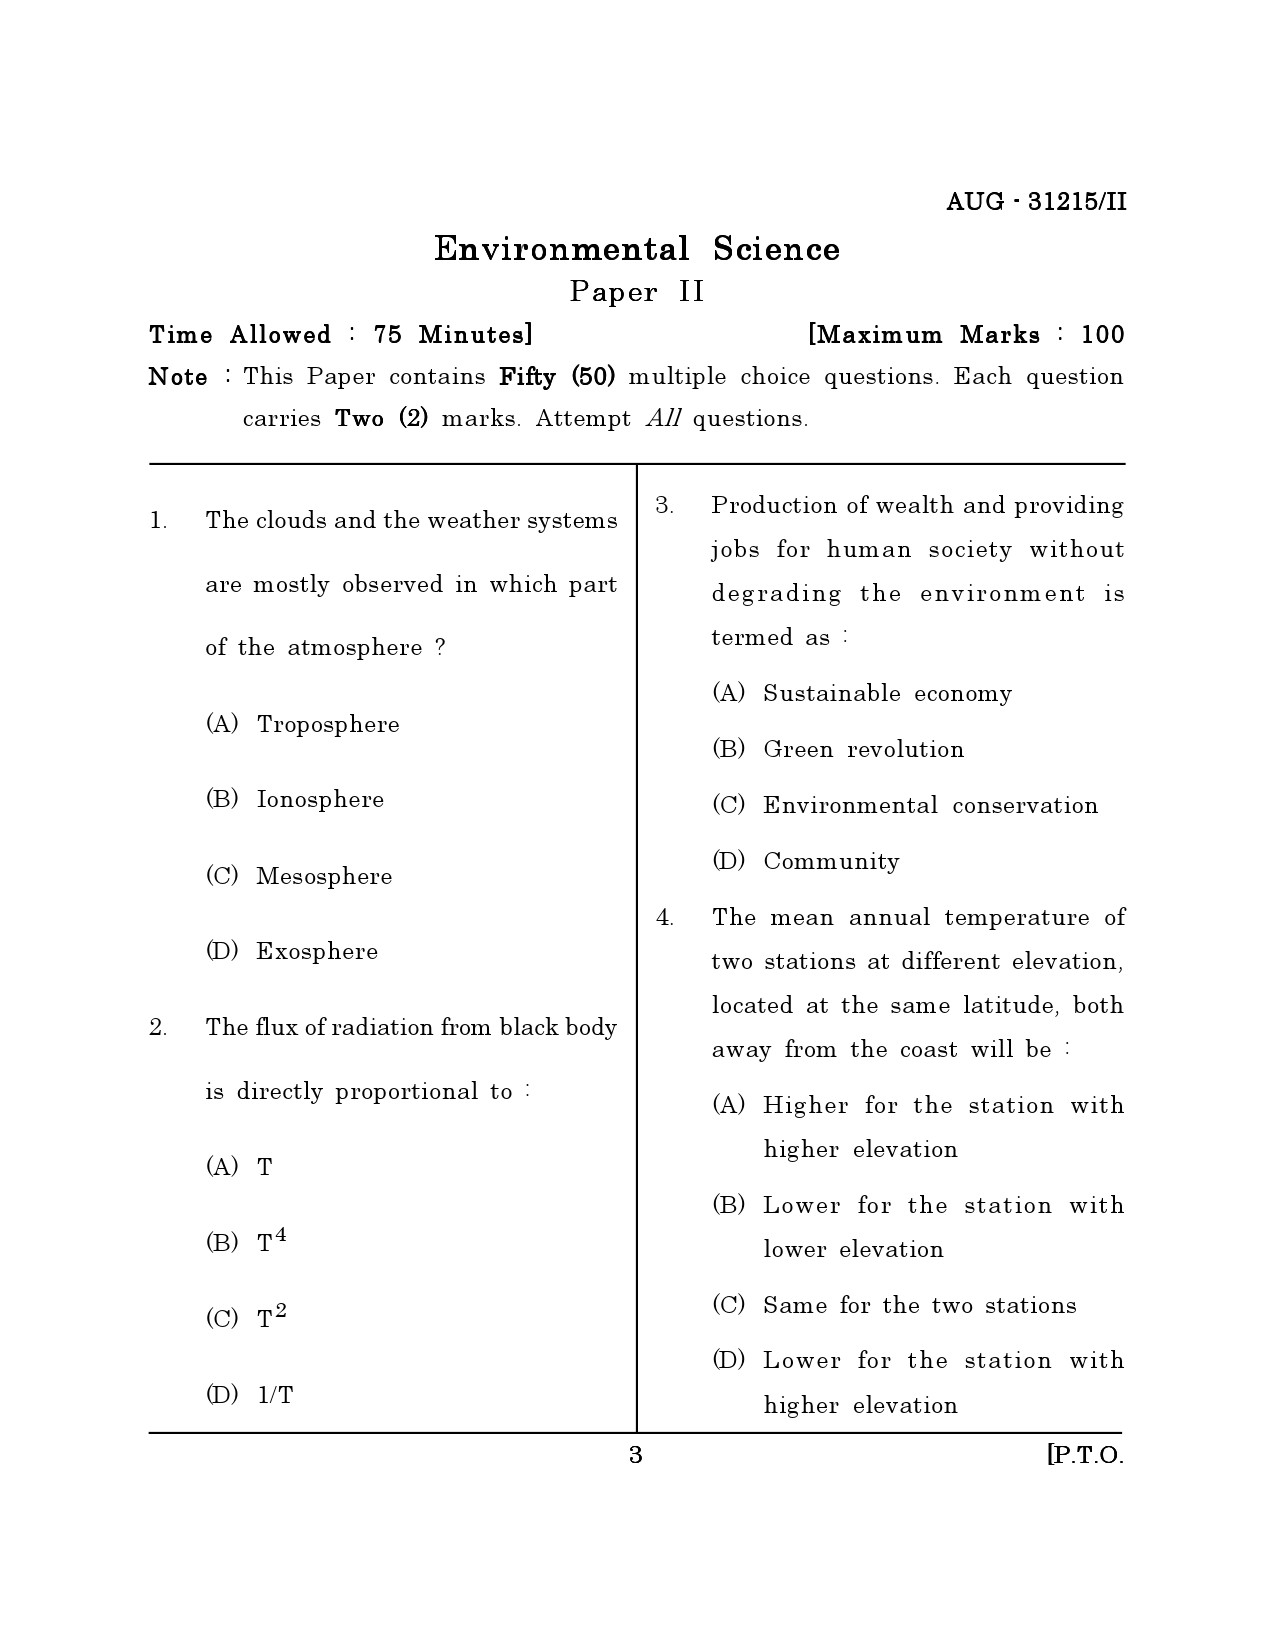 Maharashtra SET Environmental Sciences Question Paper II August 2015 2